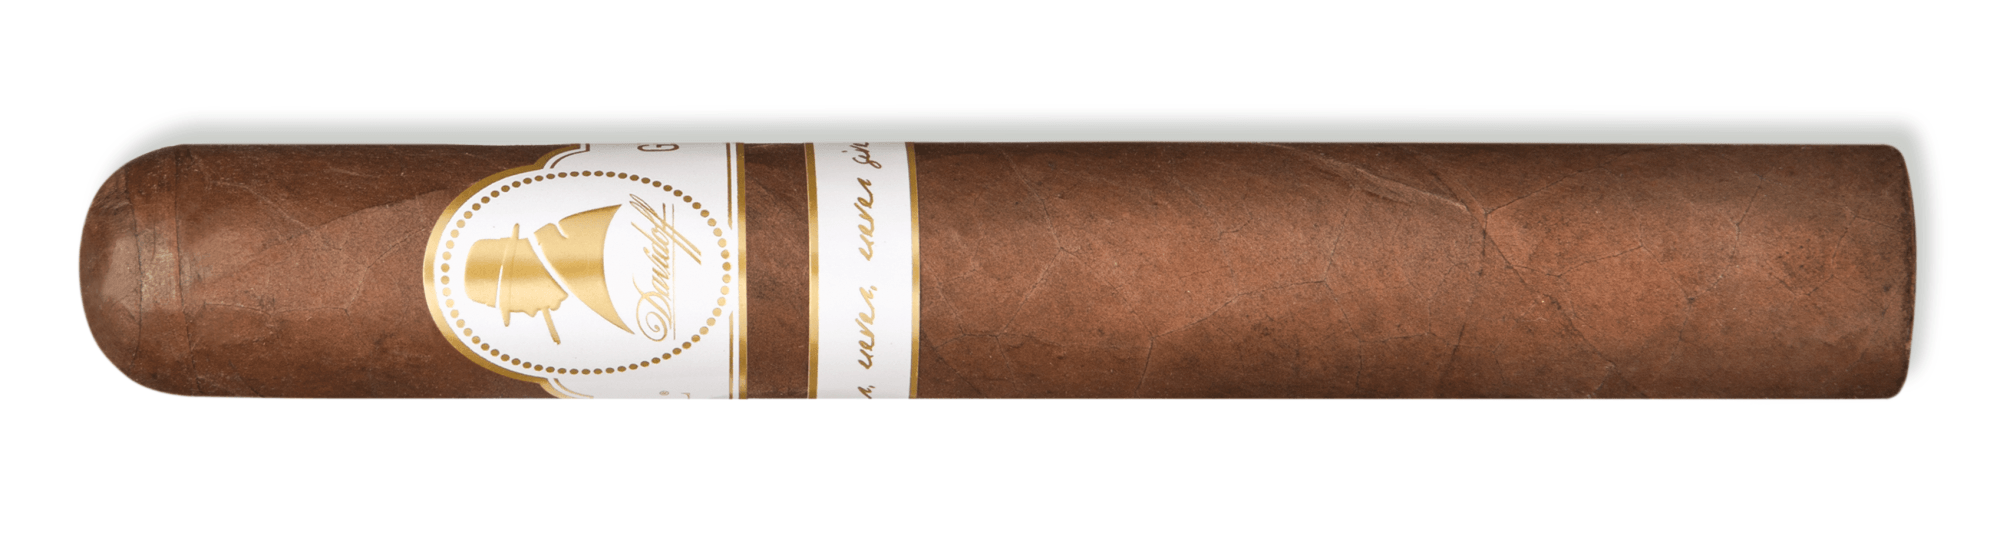 Davidoff Winston Churchill Limited Edition The Raconteur cigar